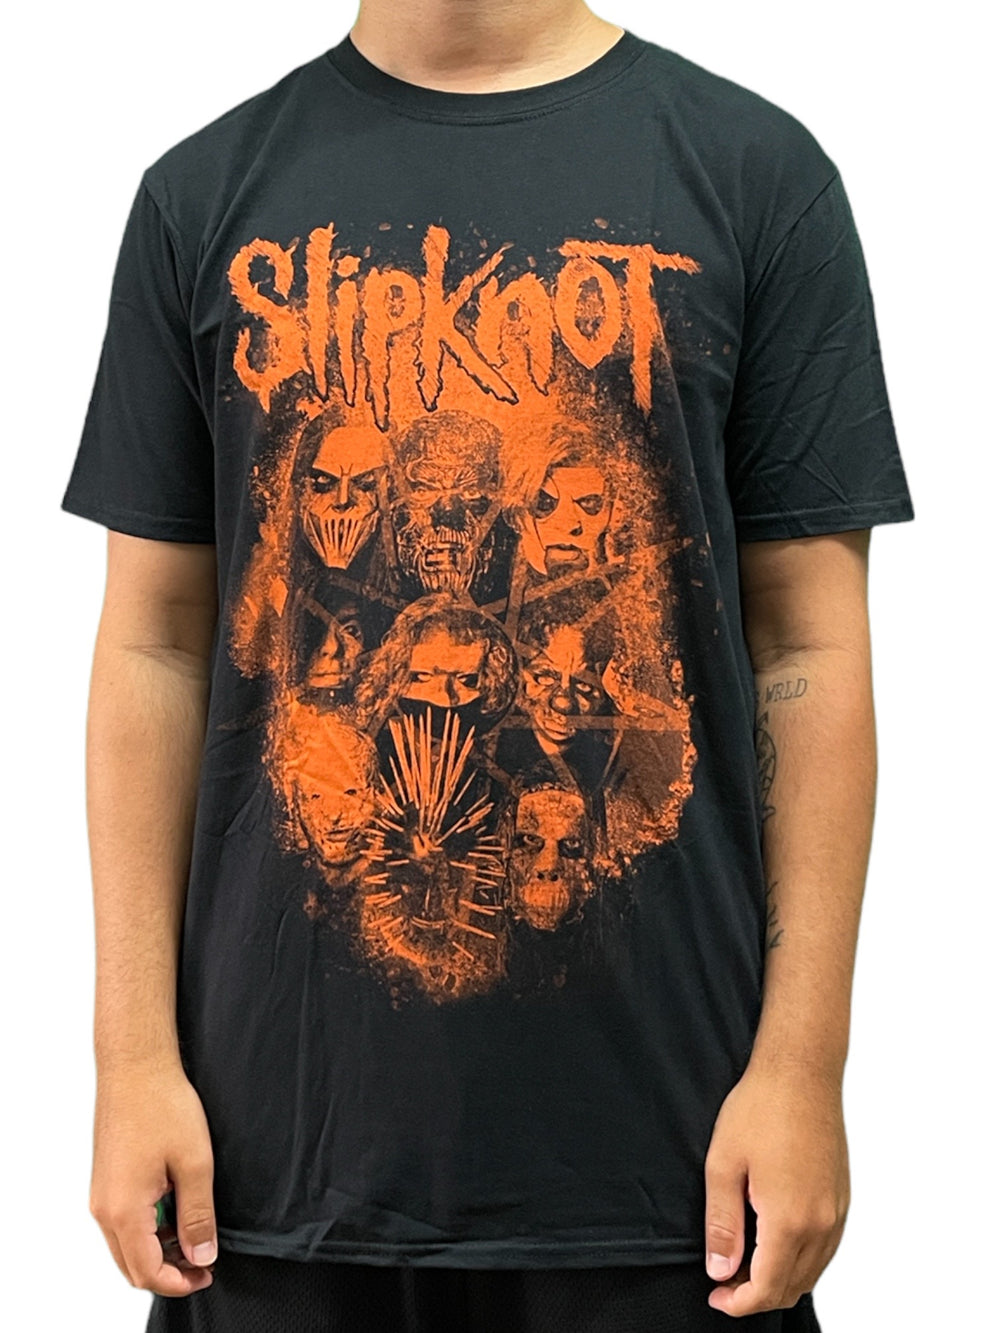 Slipknot WANYK Orange Unisex Official T Shirt Brand New Various Sizes Front & Back Printed